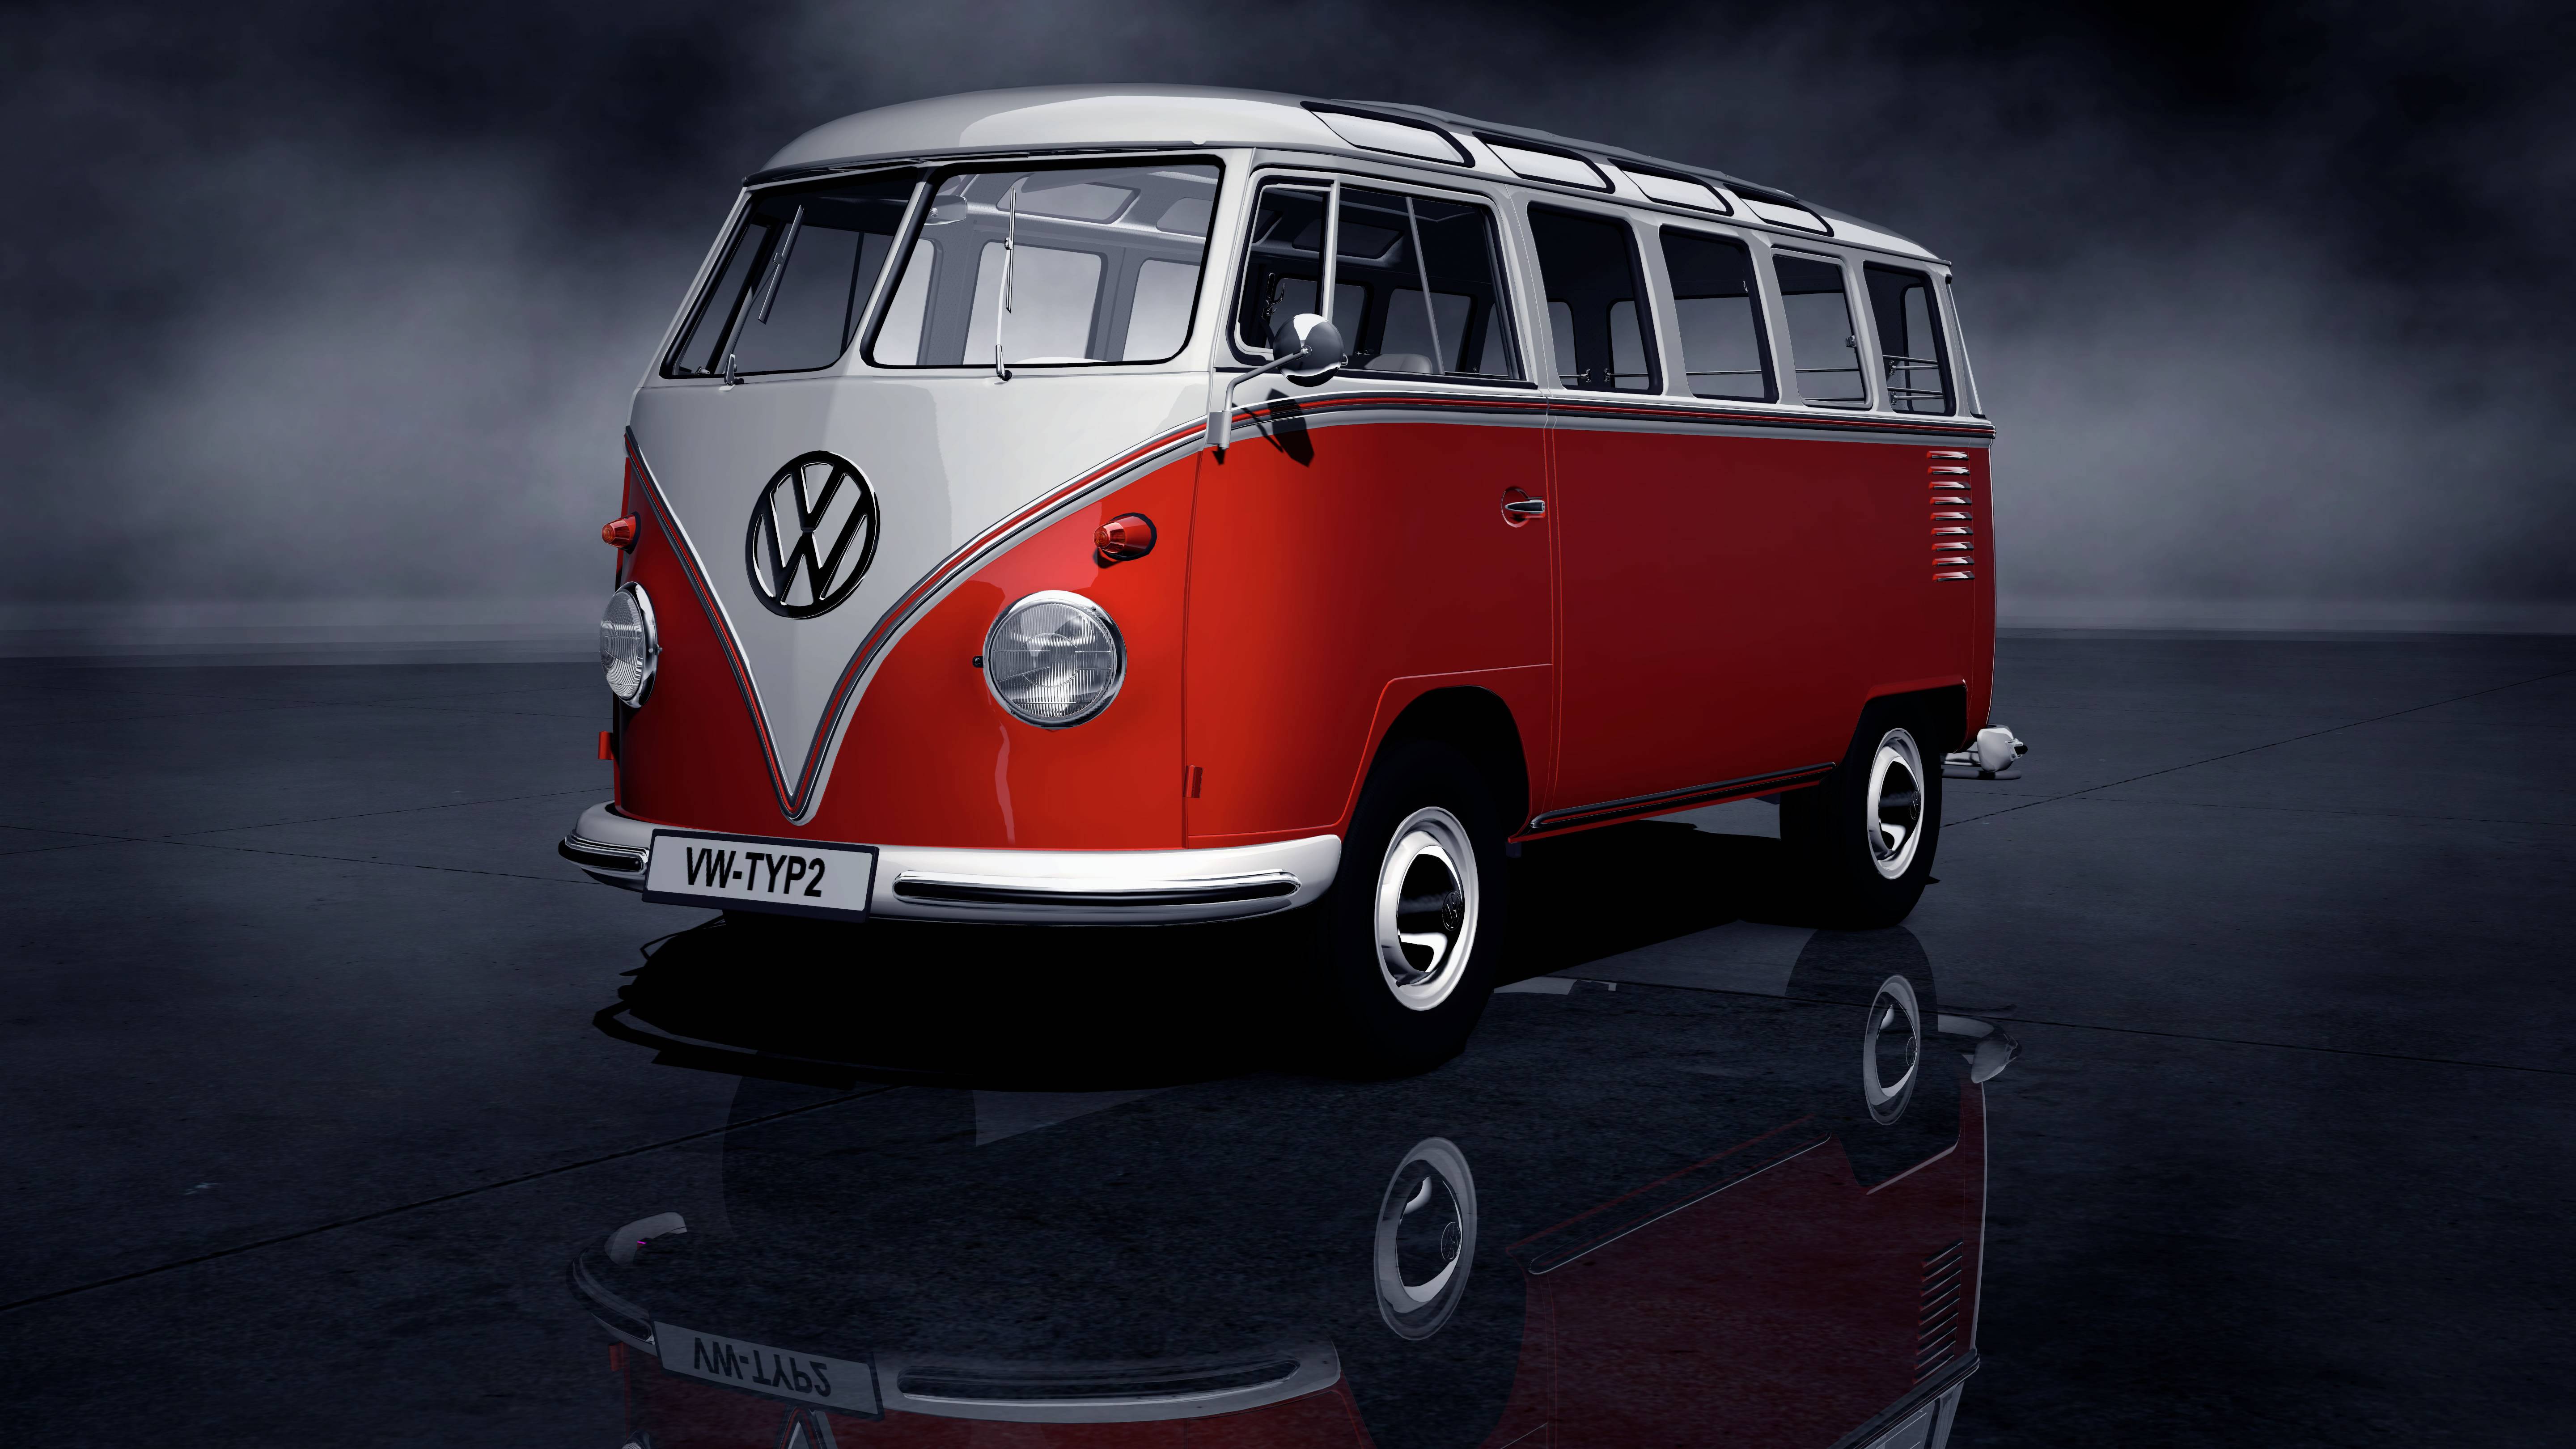 VW Bus Wallpaper Free Download · VW Wallpaper. Best Desktop